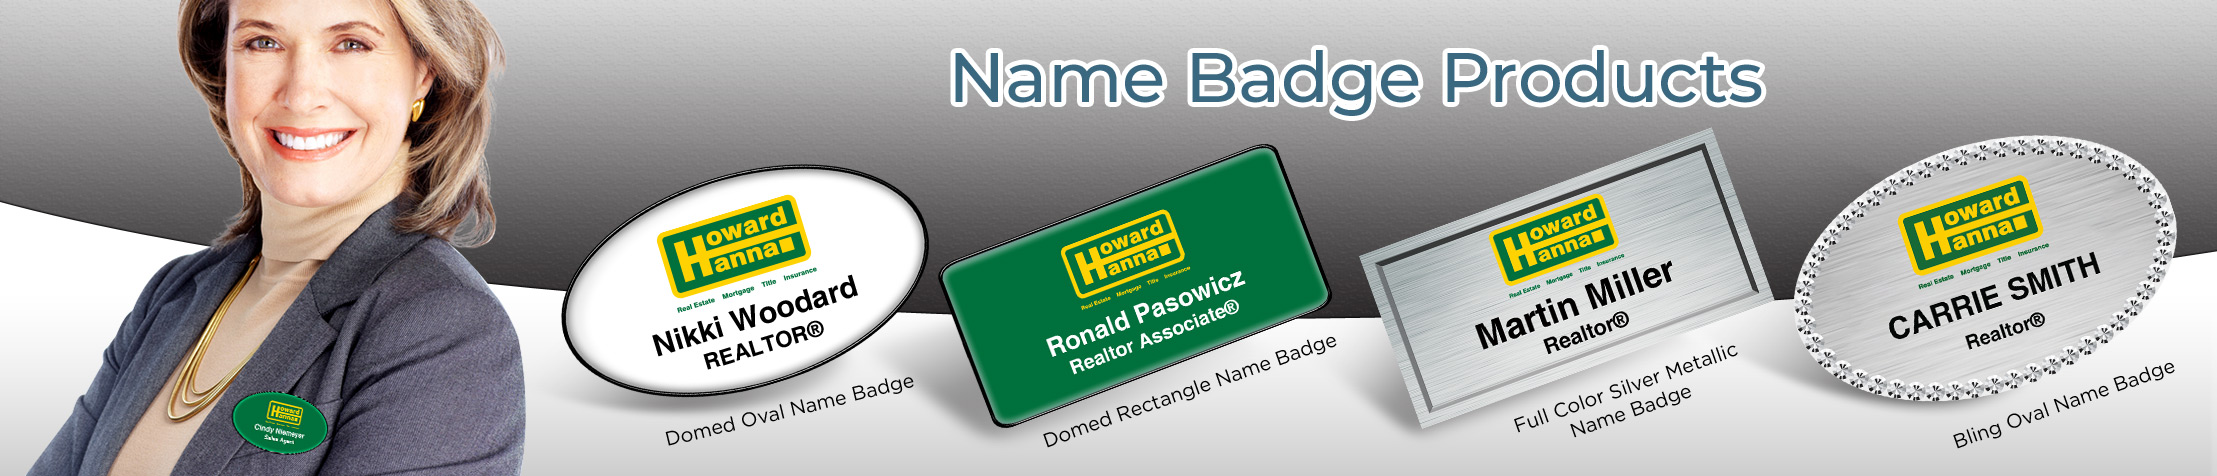 Howard Hanna Real Estate Name Badge Products - Howard Hanna Name Tags for Realtors | BestPrintBuy.com